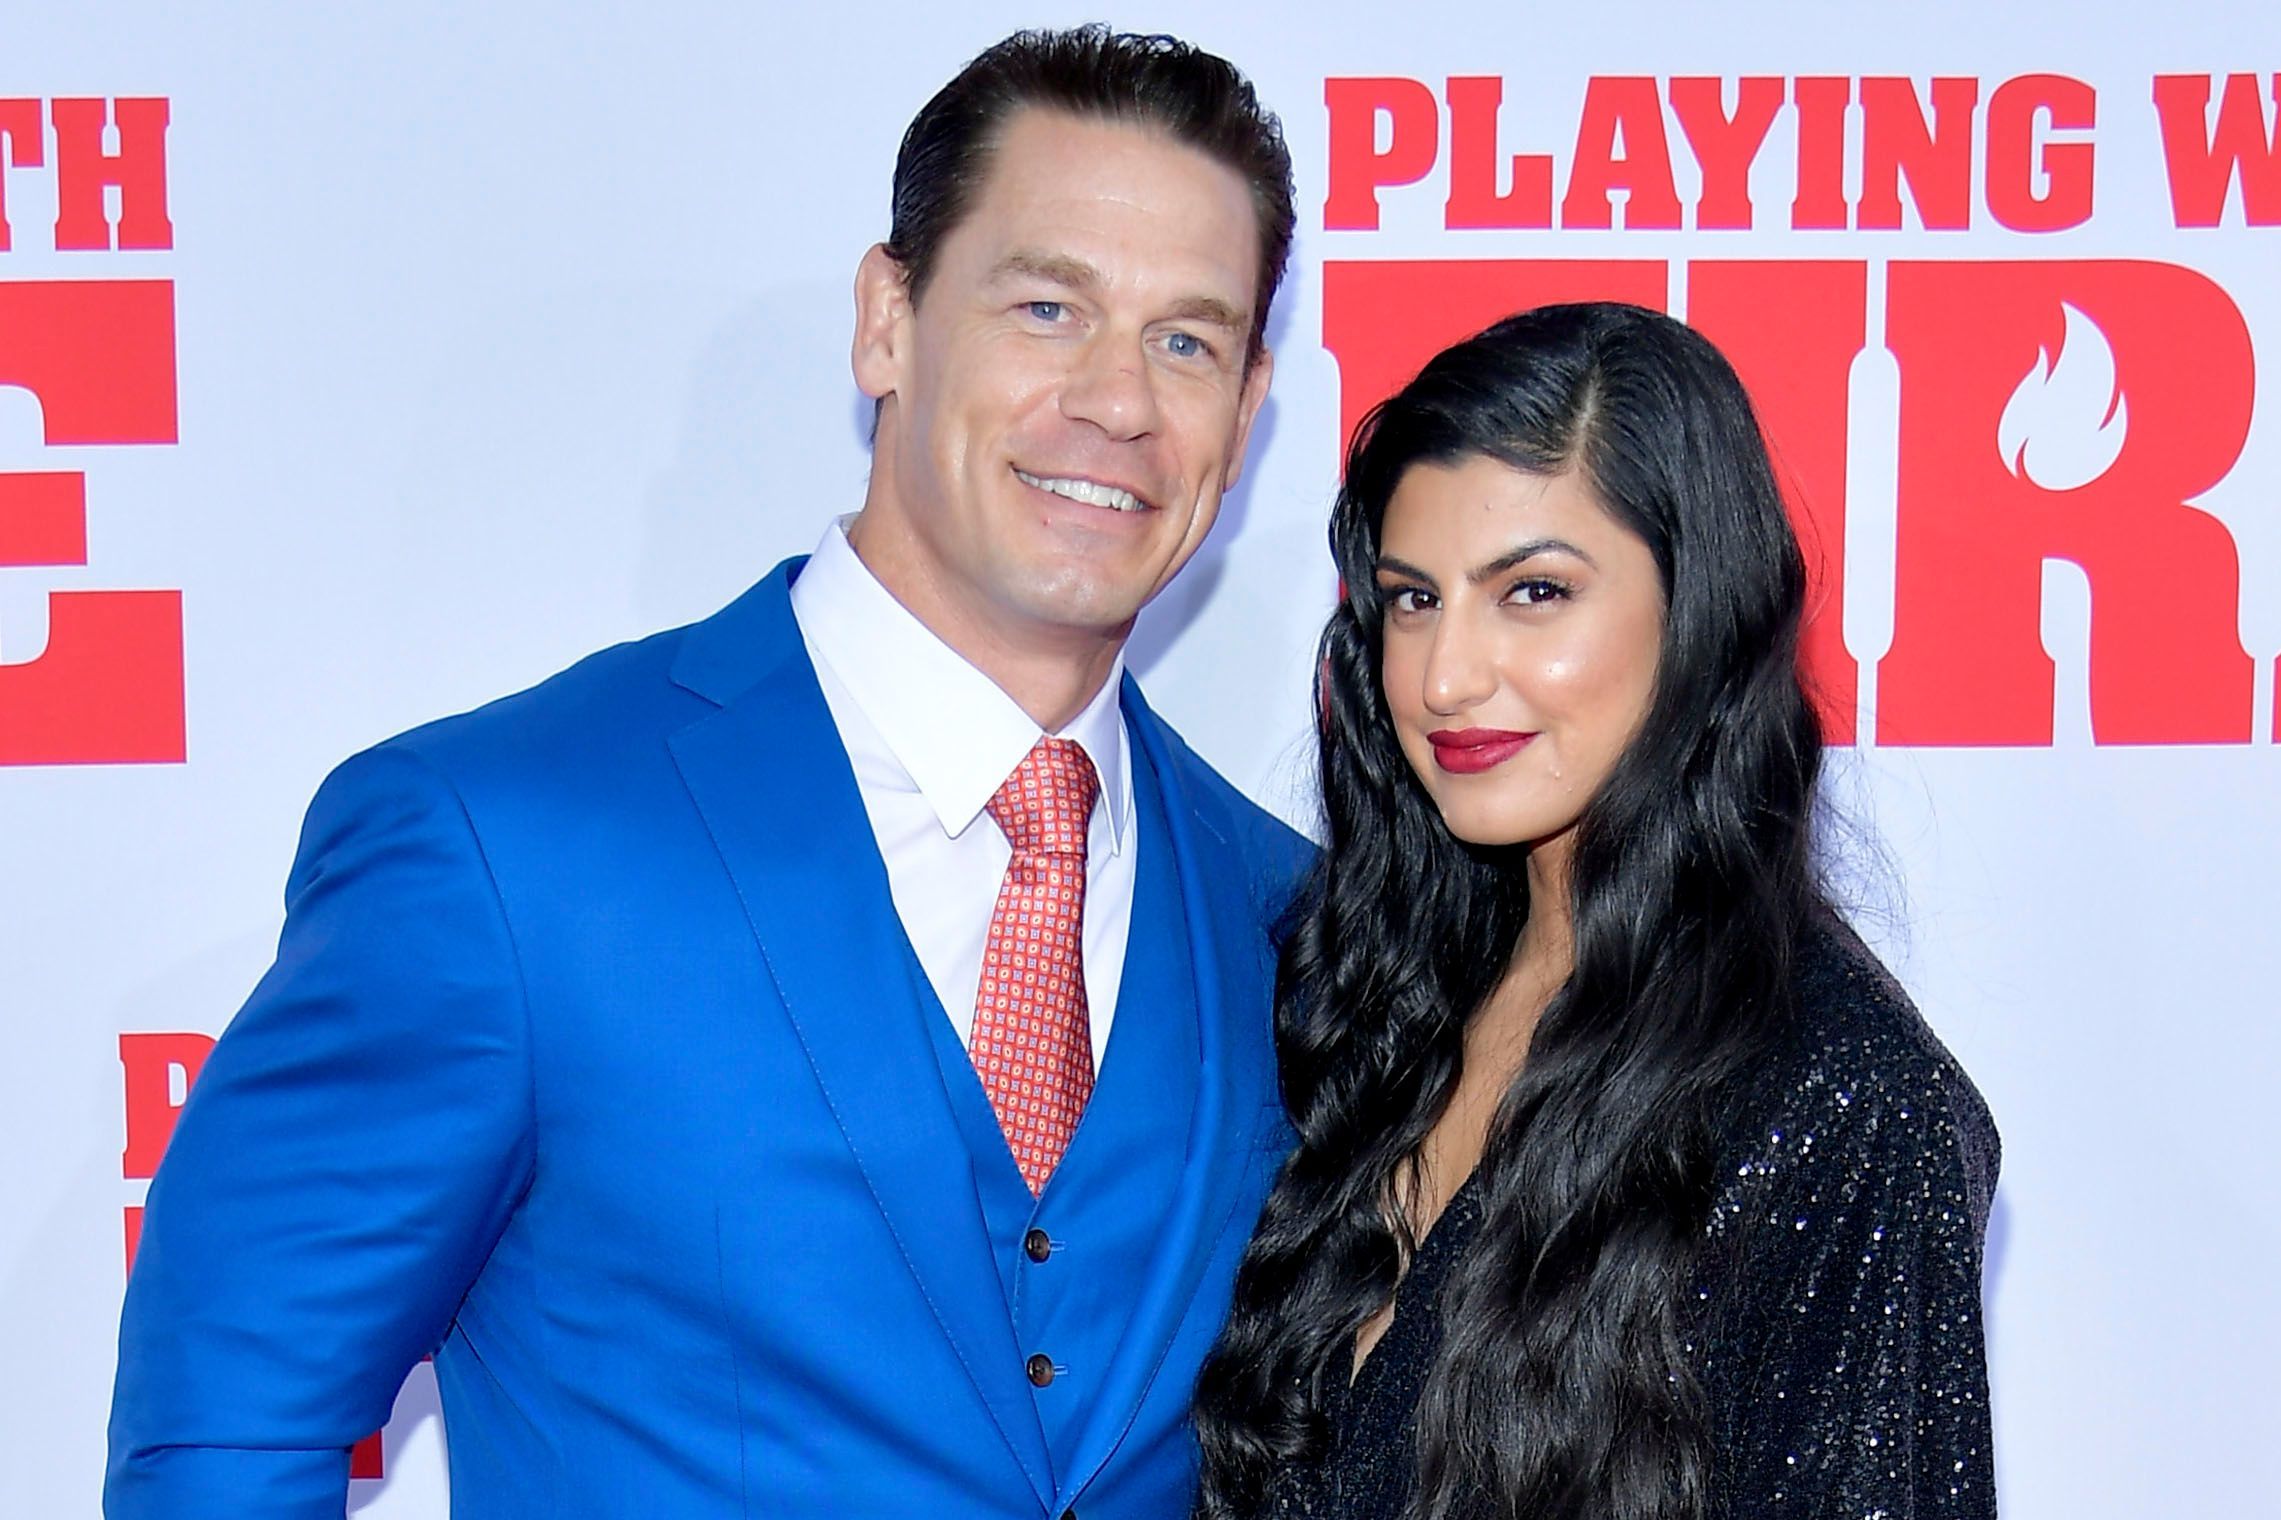 John Cena and girlfriend Shay Shariatzadeh make red carpet debut